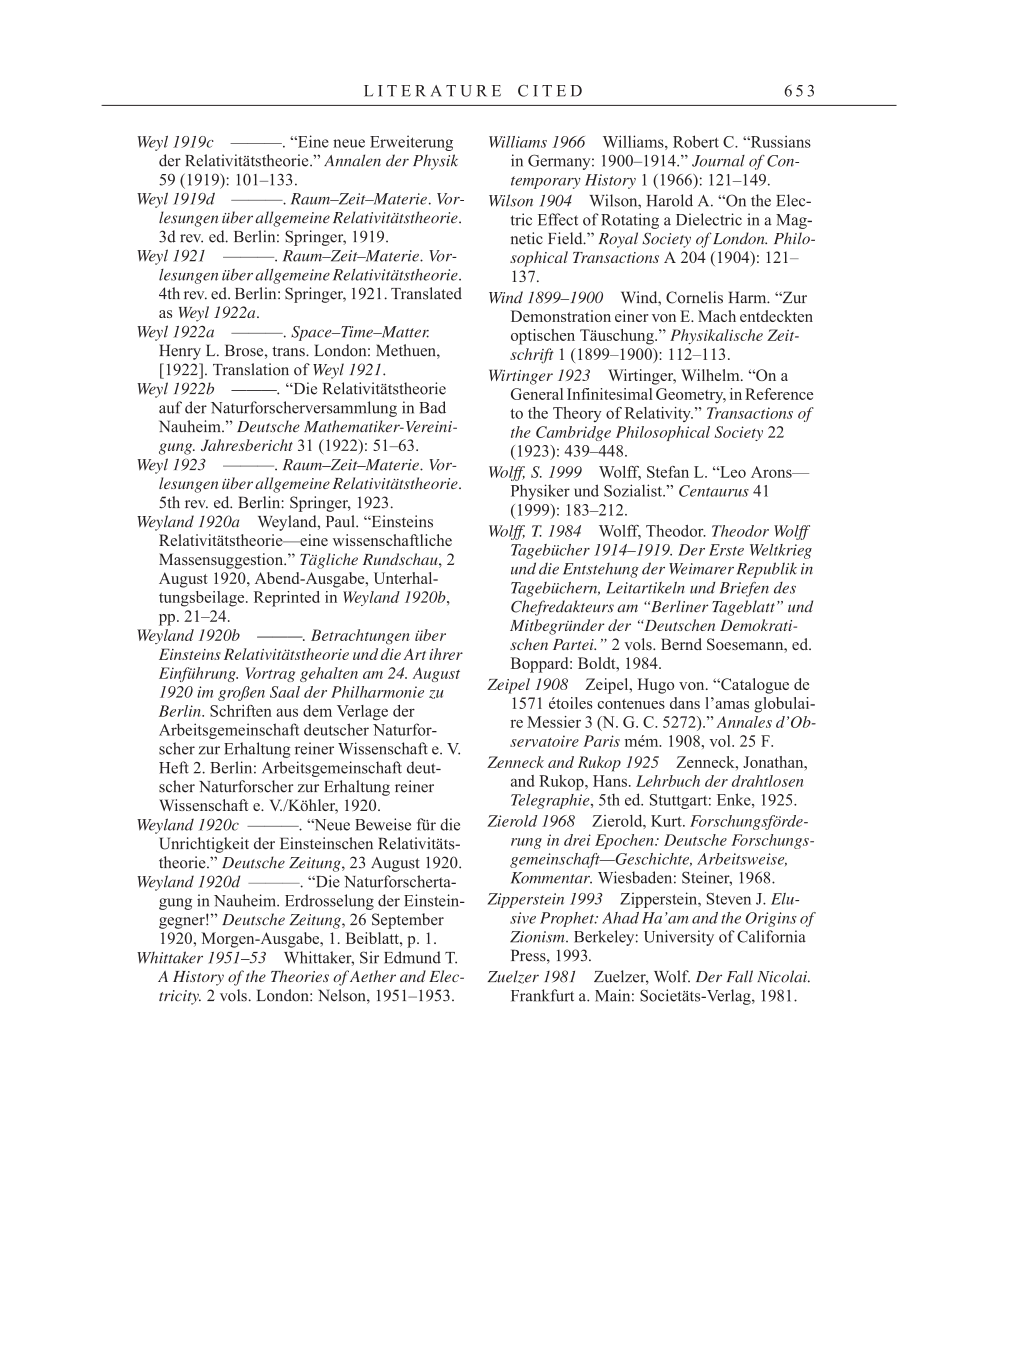 Volume 7: The Berlin Years: Writings, 1918-1921 page 653